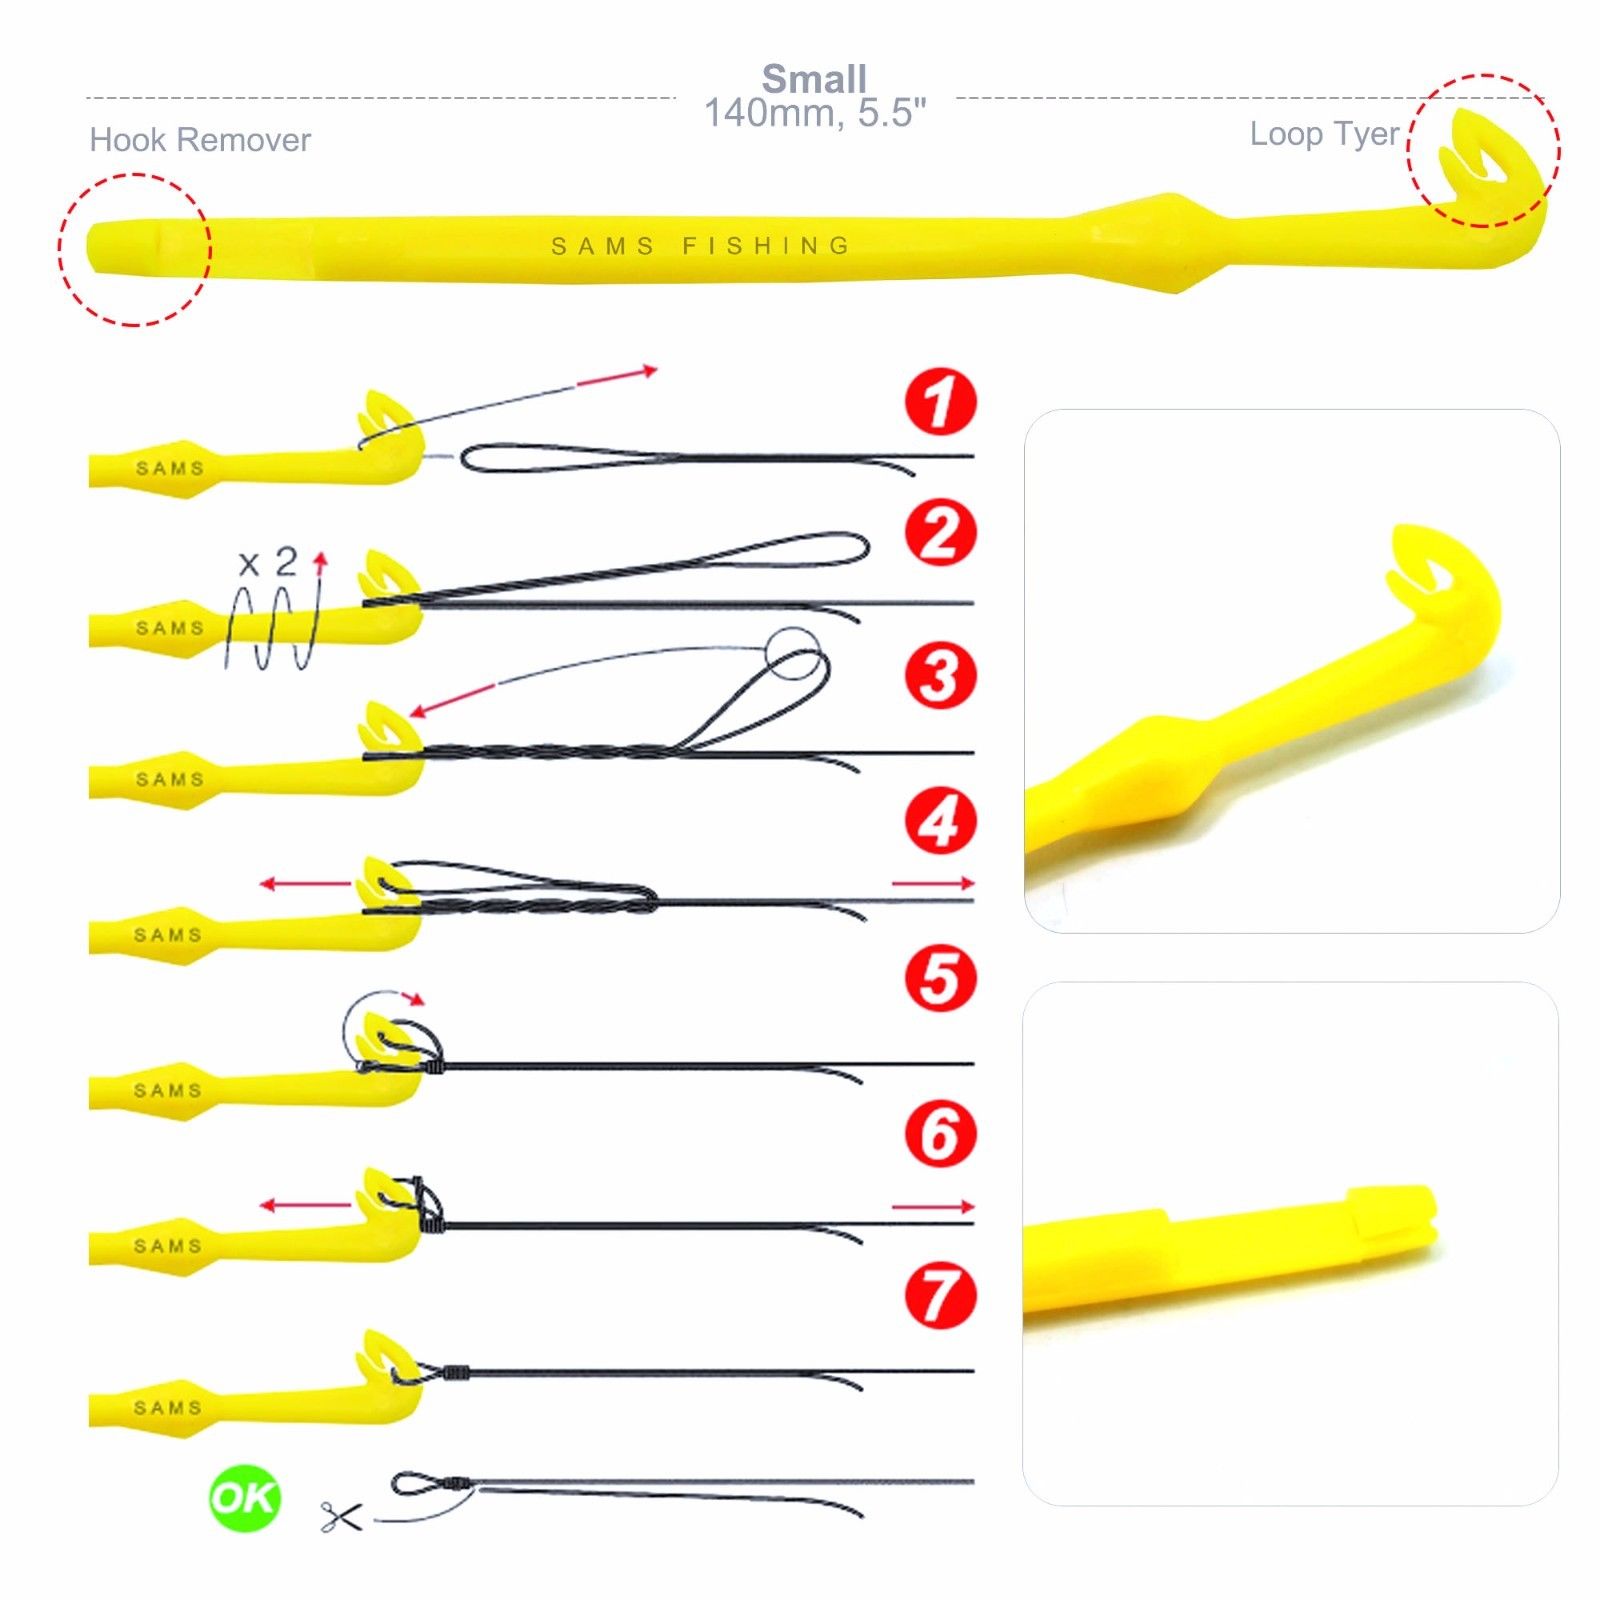 FLAWISH Nail Knot Tool - Tie Fast Knot Tying Tool - Fishing Line